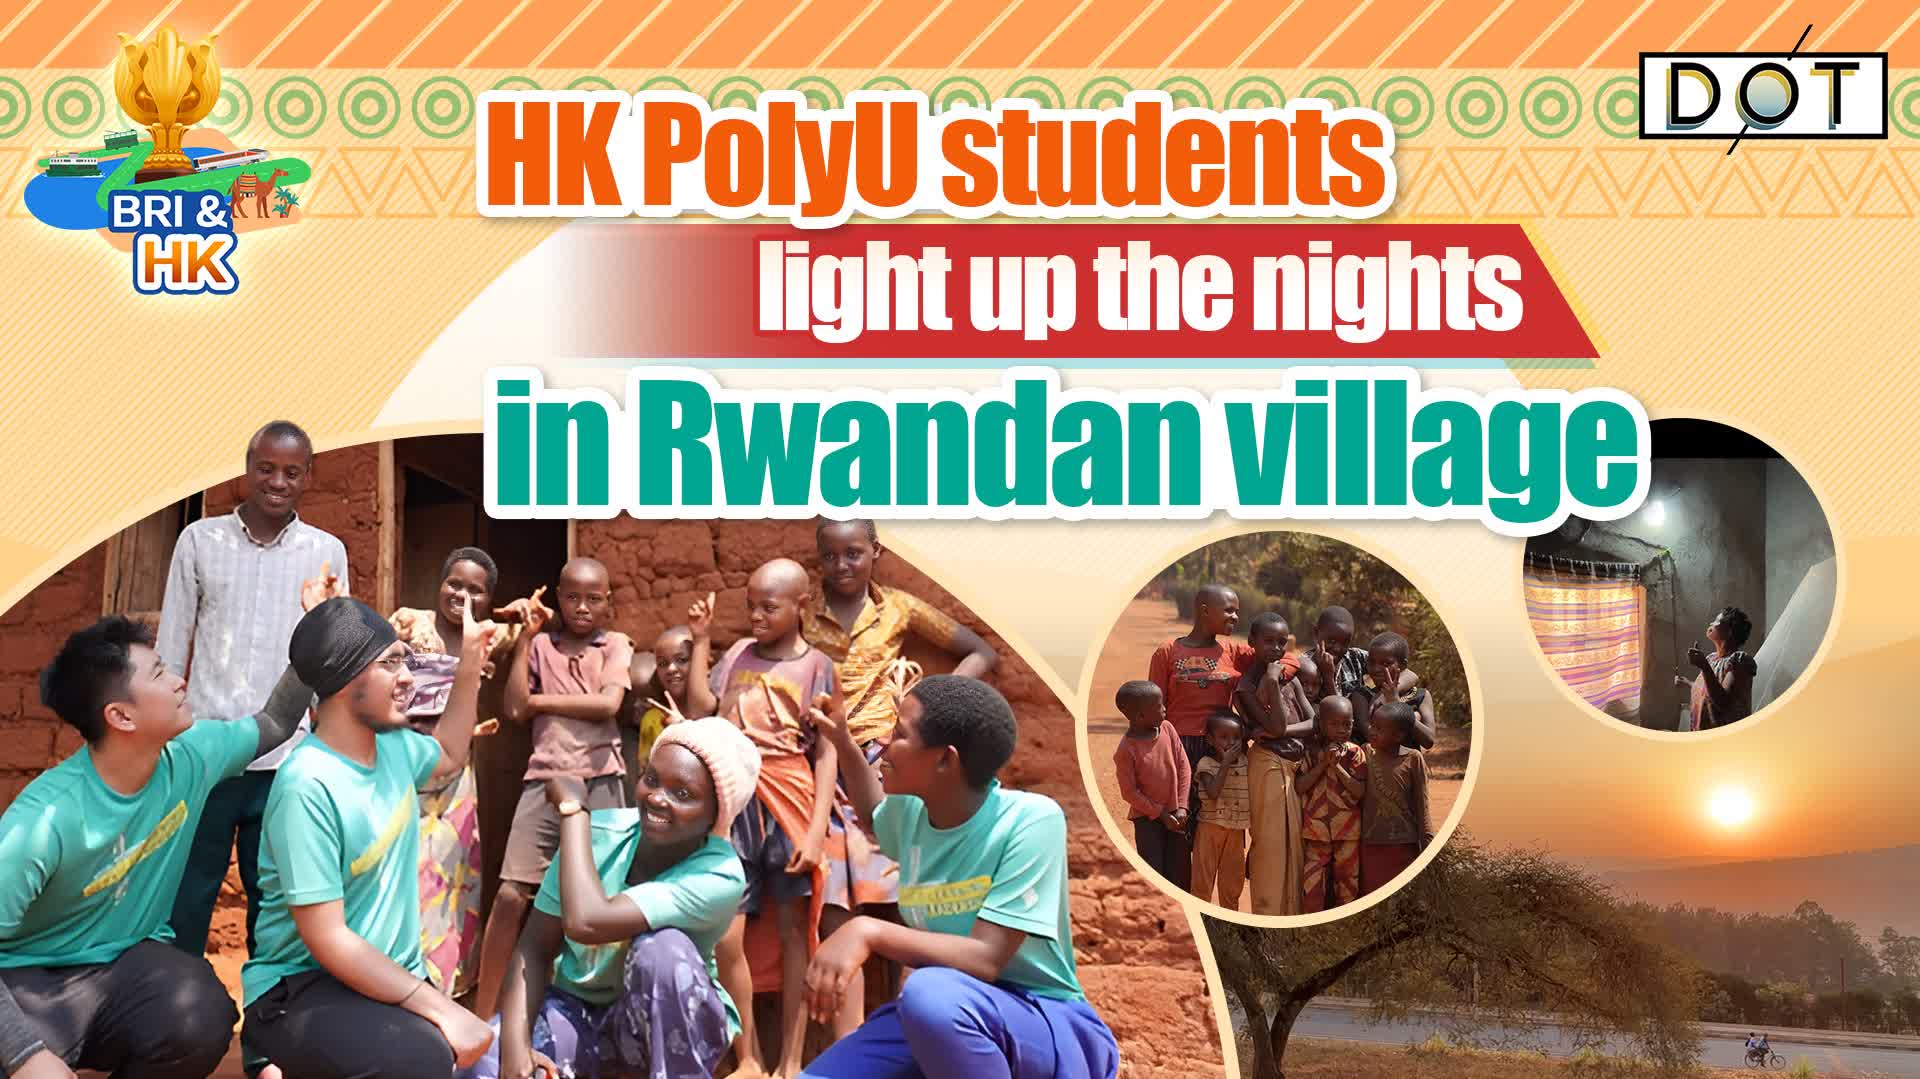 BRI & HK | PolyU students light up the nights in Rwandan village